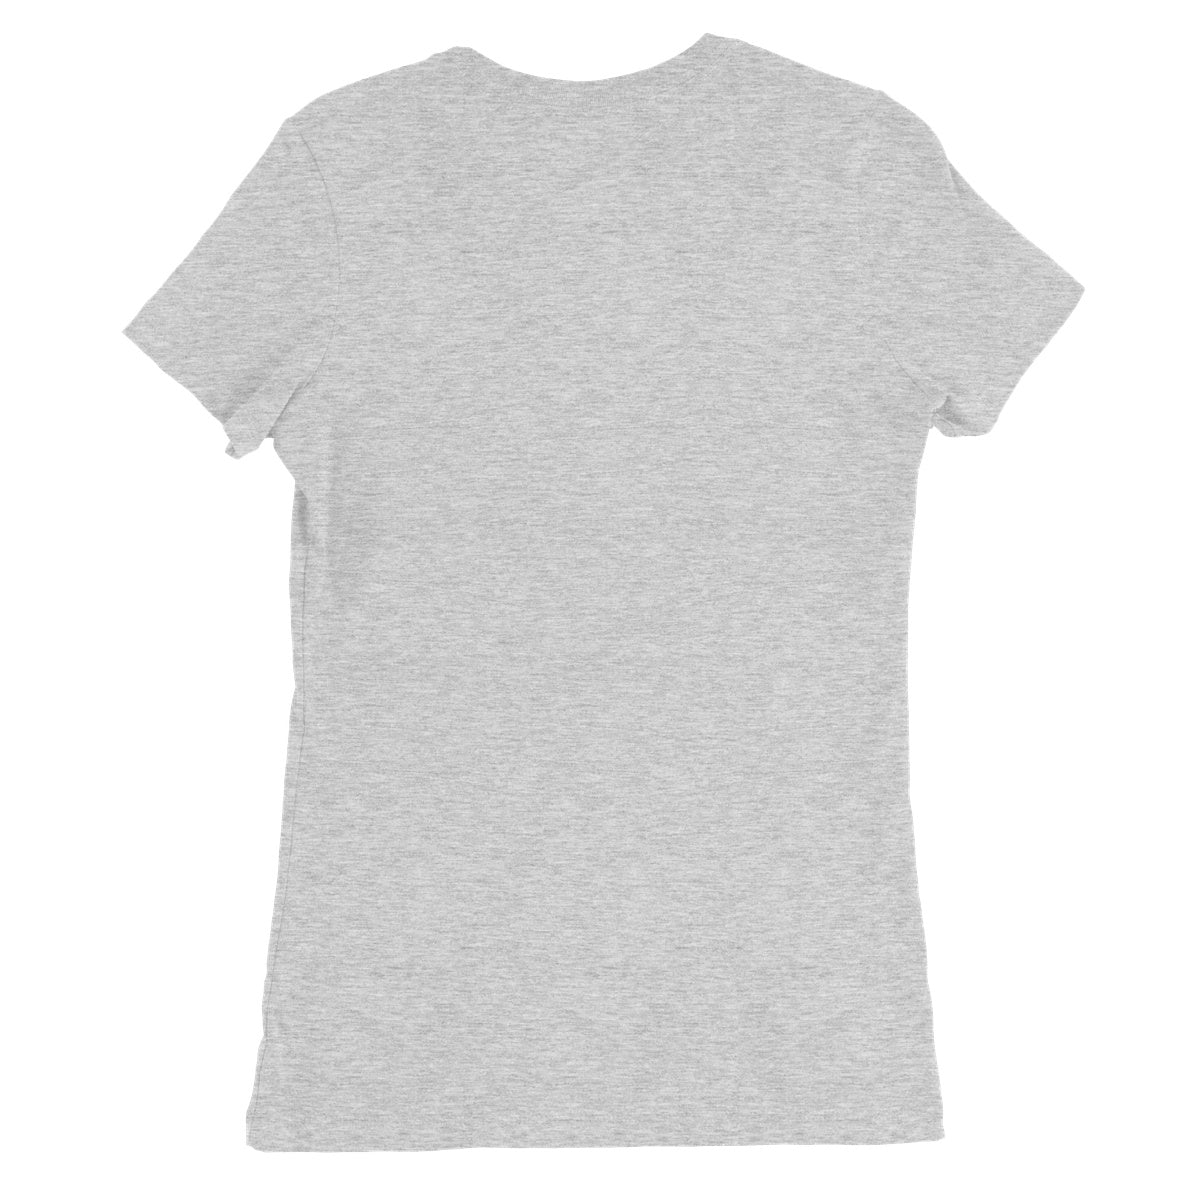 AQUA HMP2 - 05 - Kinder - Feines Jersey-T-Shirt für Frauen